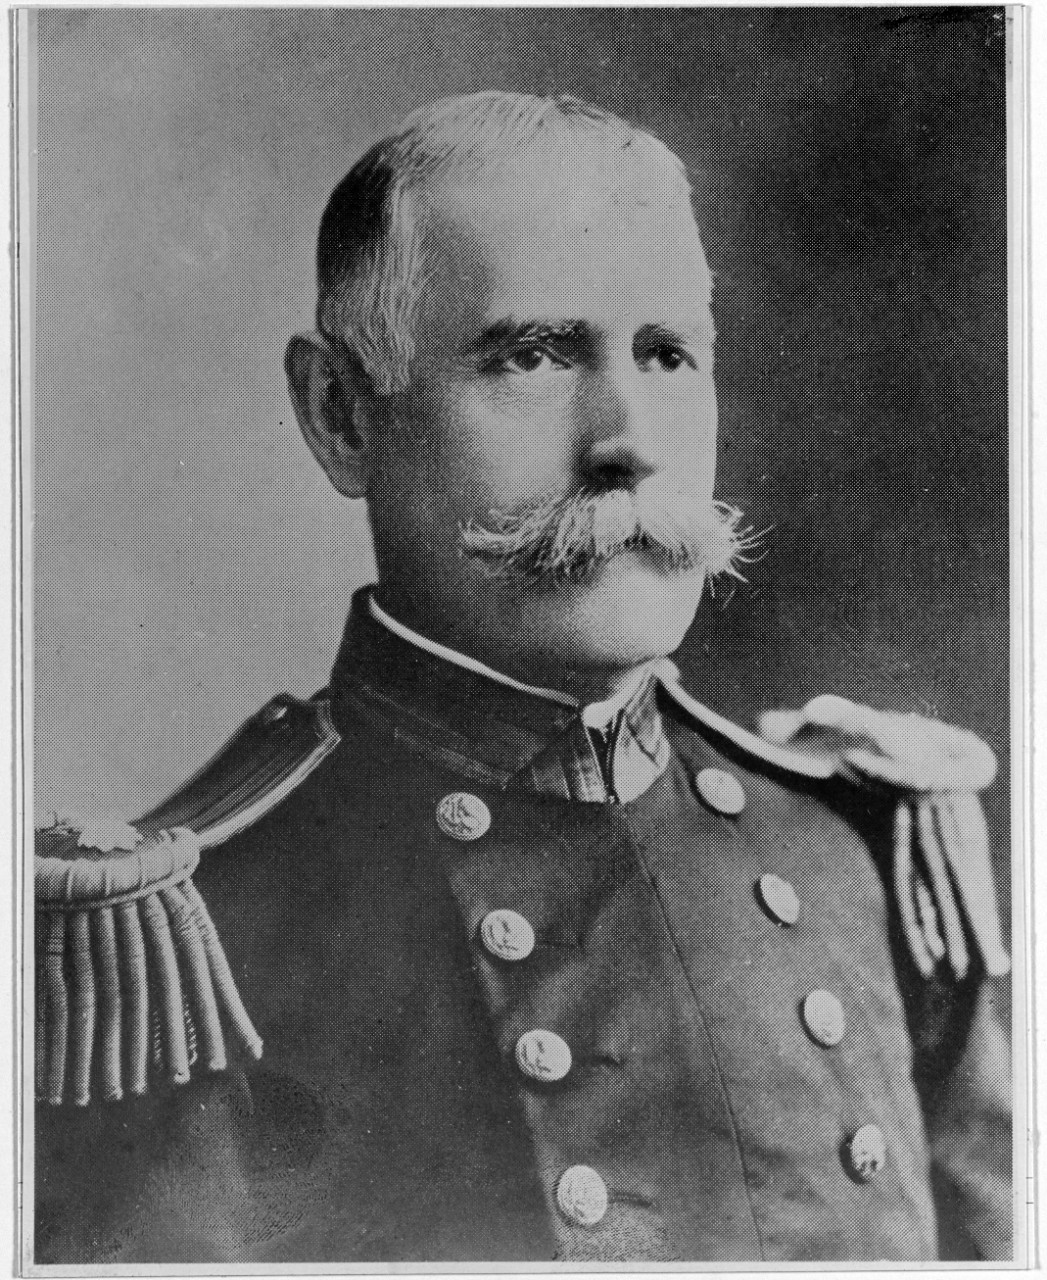 Lieutenant Colonel Joseph H. Pendleton USMC